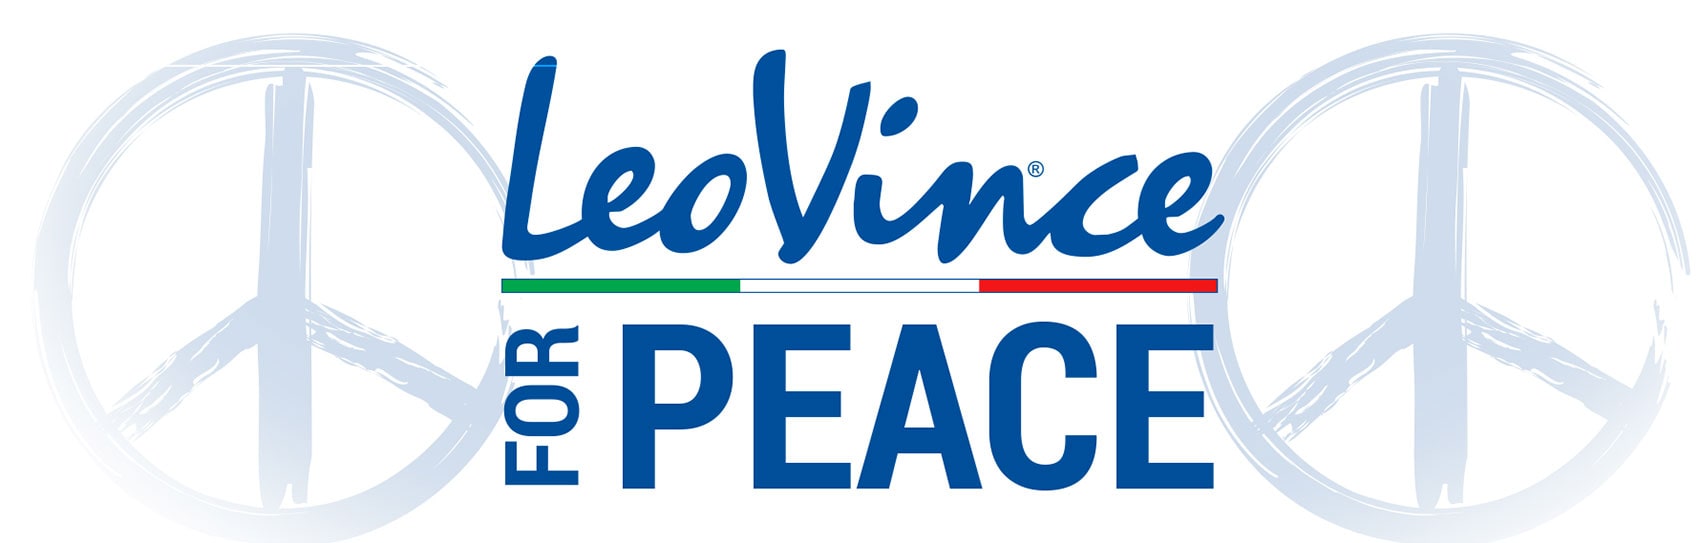 LeoVince for peace